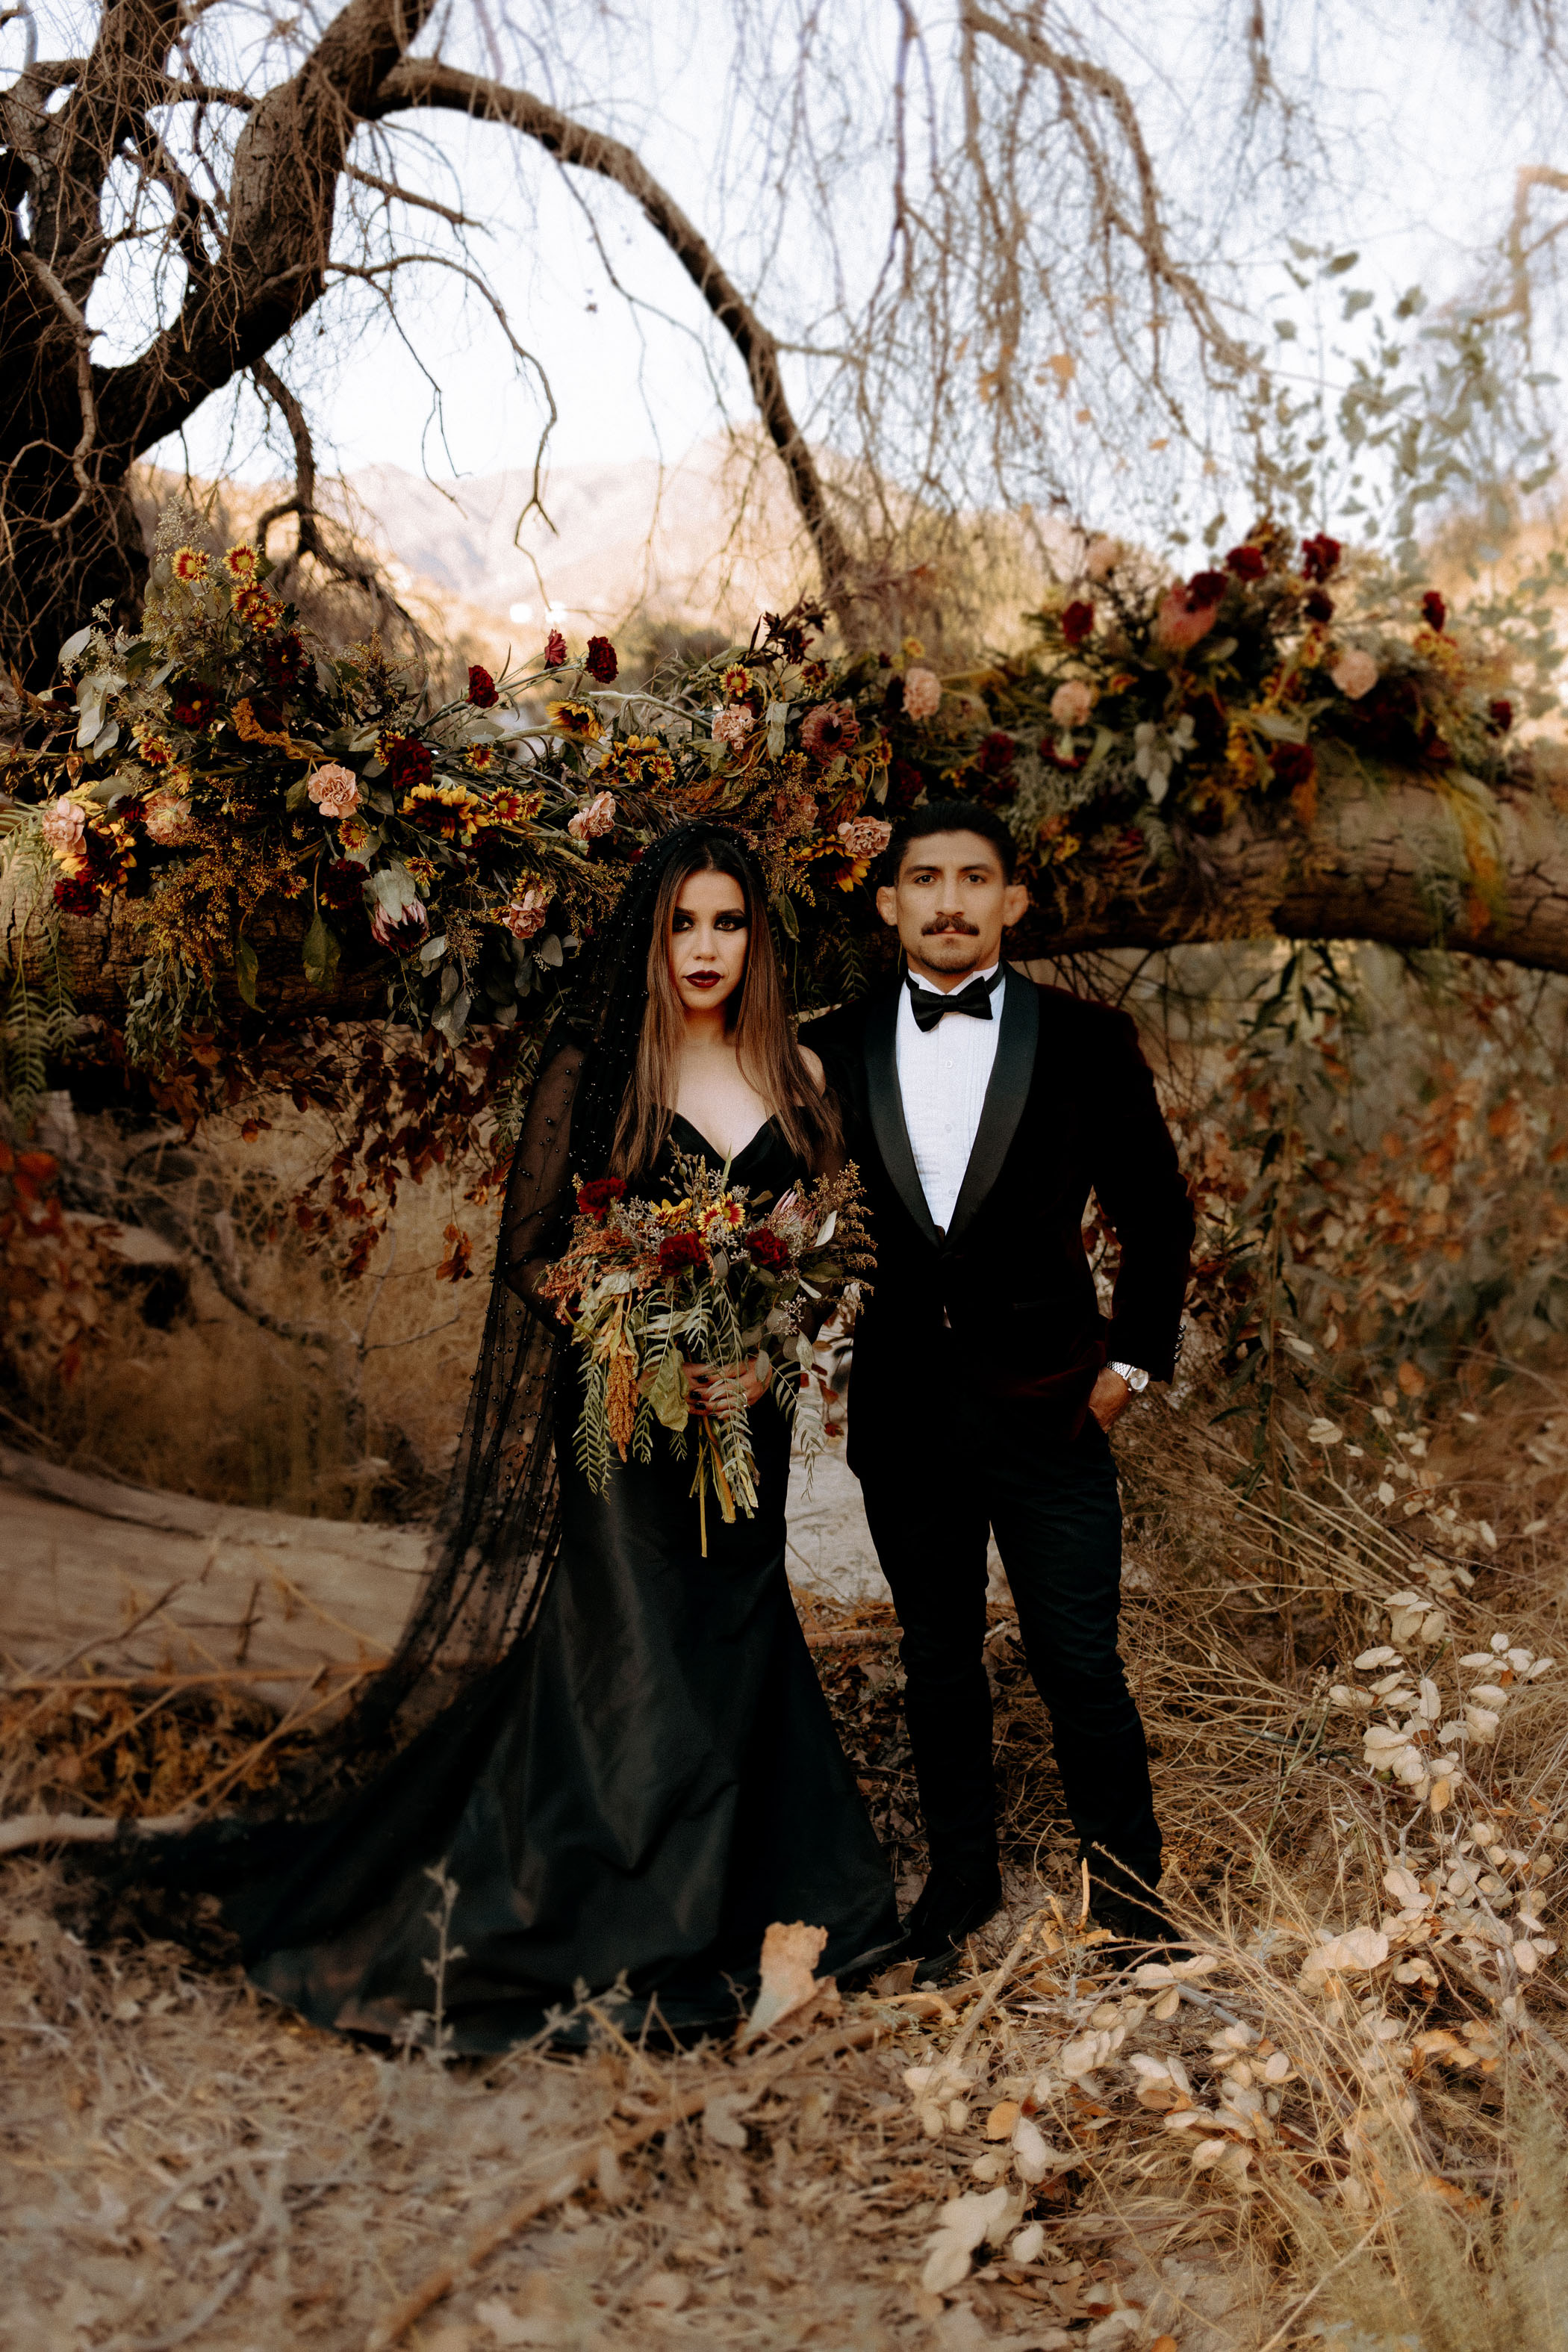 Bride in black wedding dress holding autumn flowers 